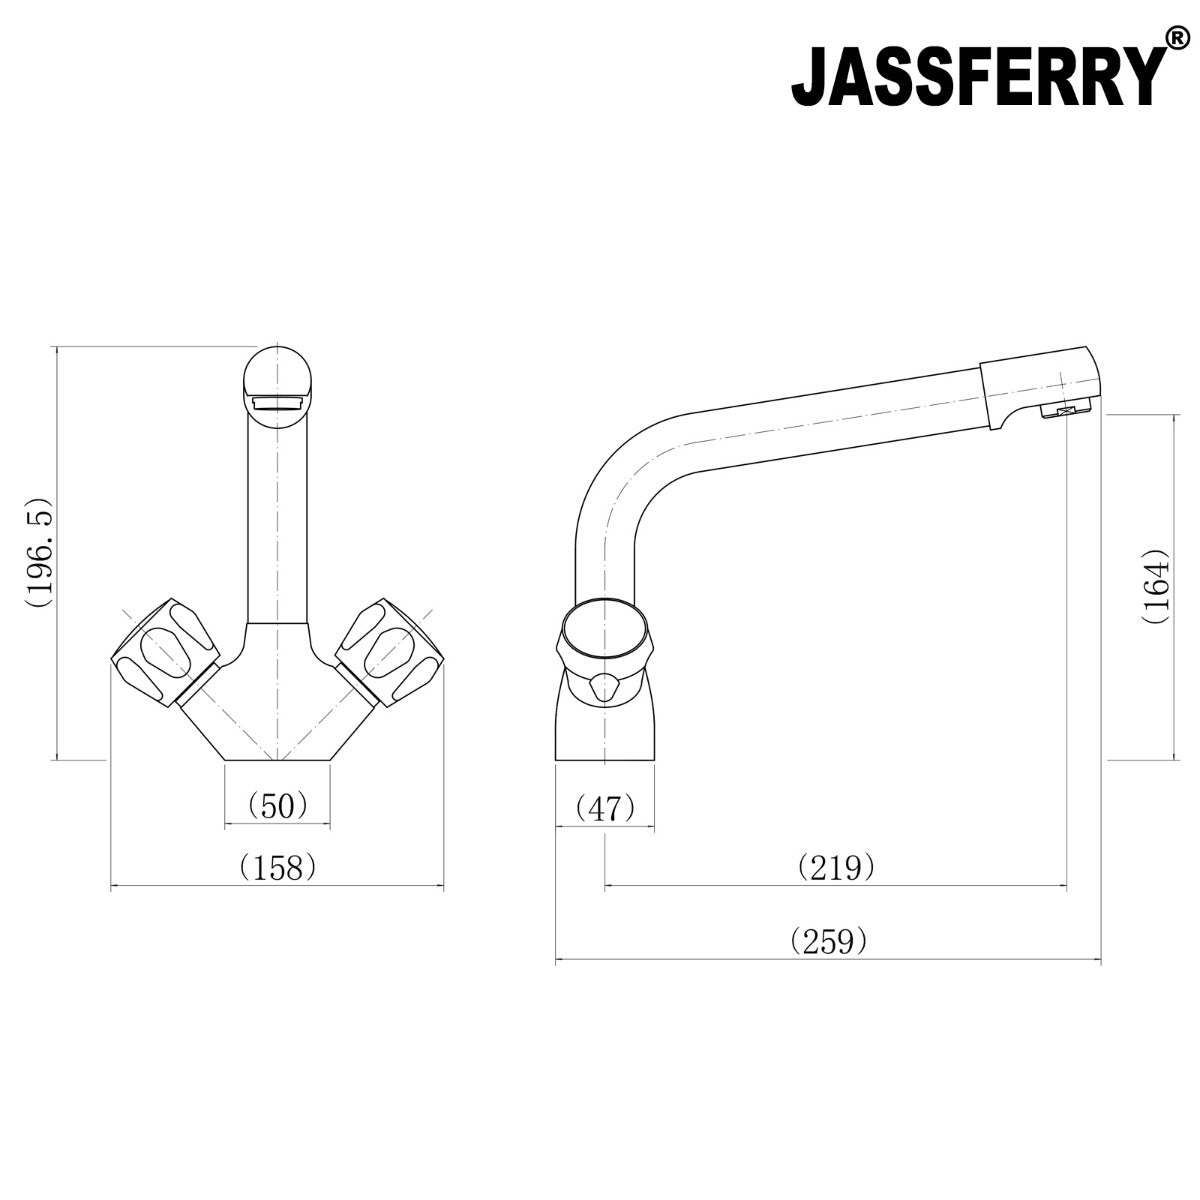 JassferryJASSFERRY Traditional Kitchen Mixer Tap Chrome Polish Dual Lever Swivel SpoutTaps